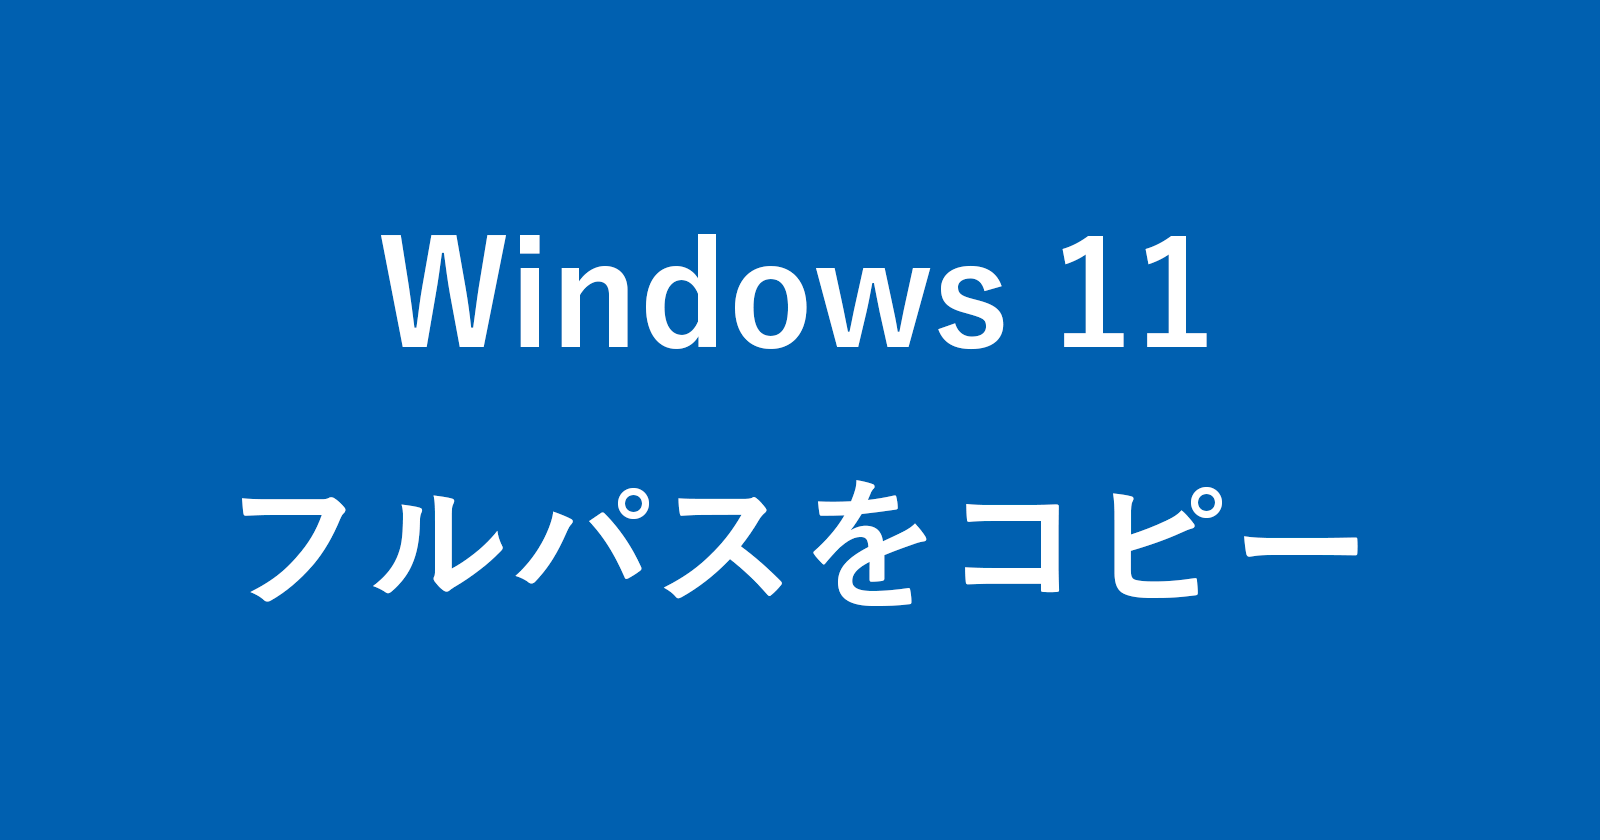 windows 11 copy full path